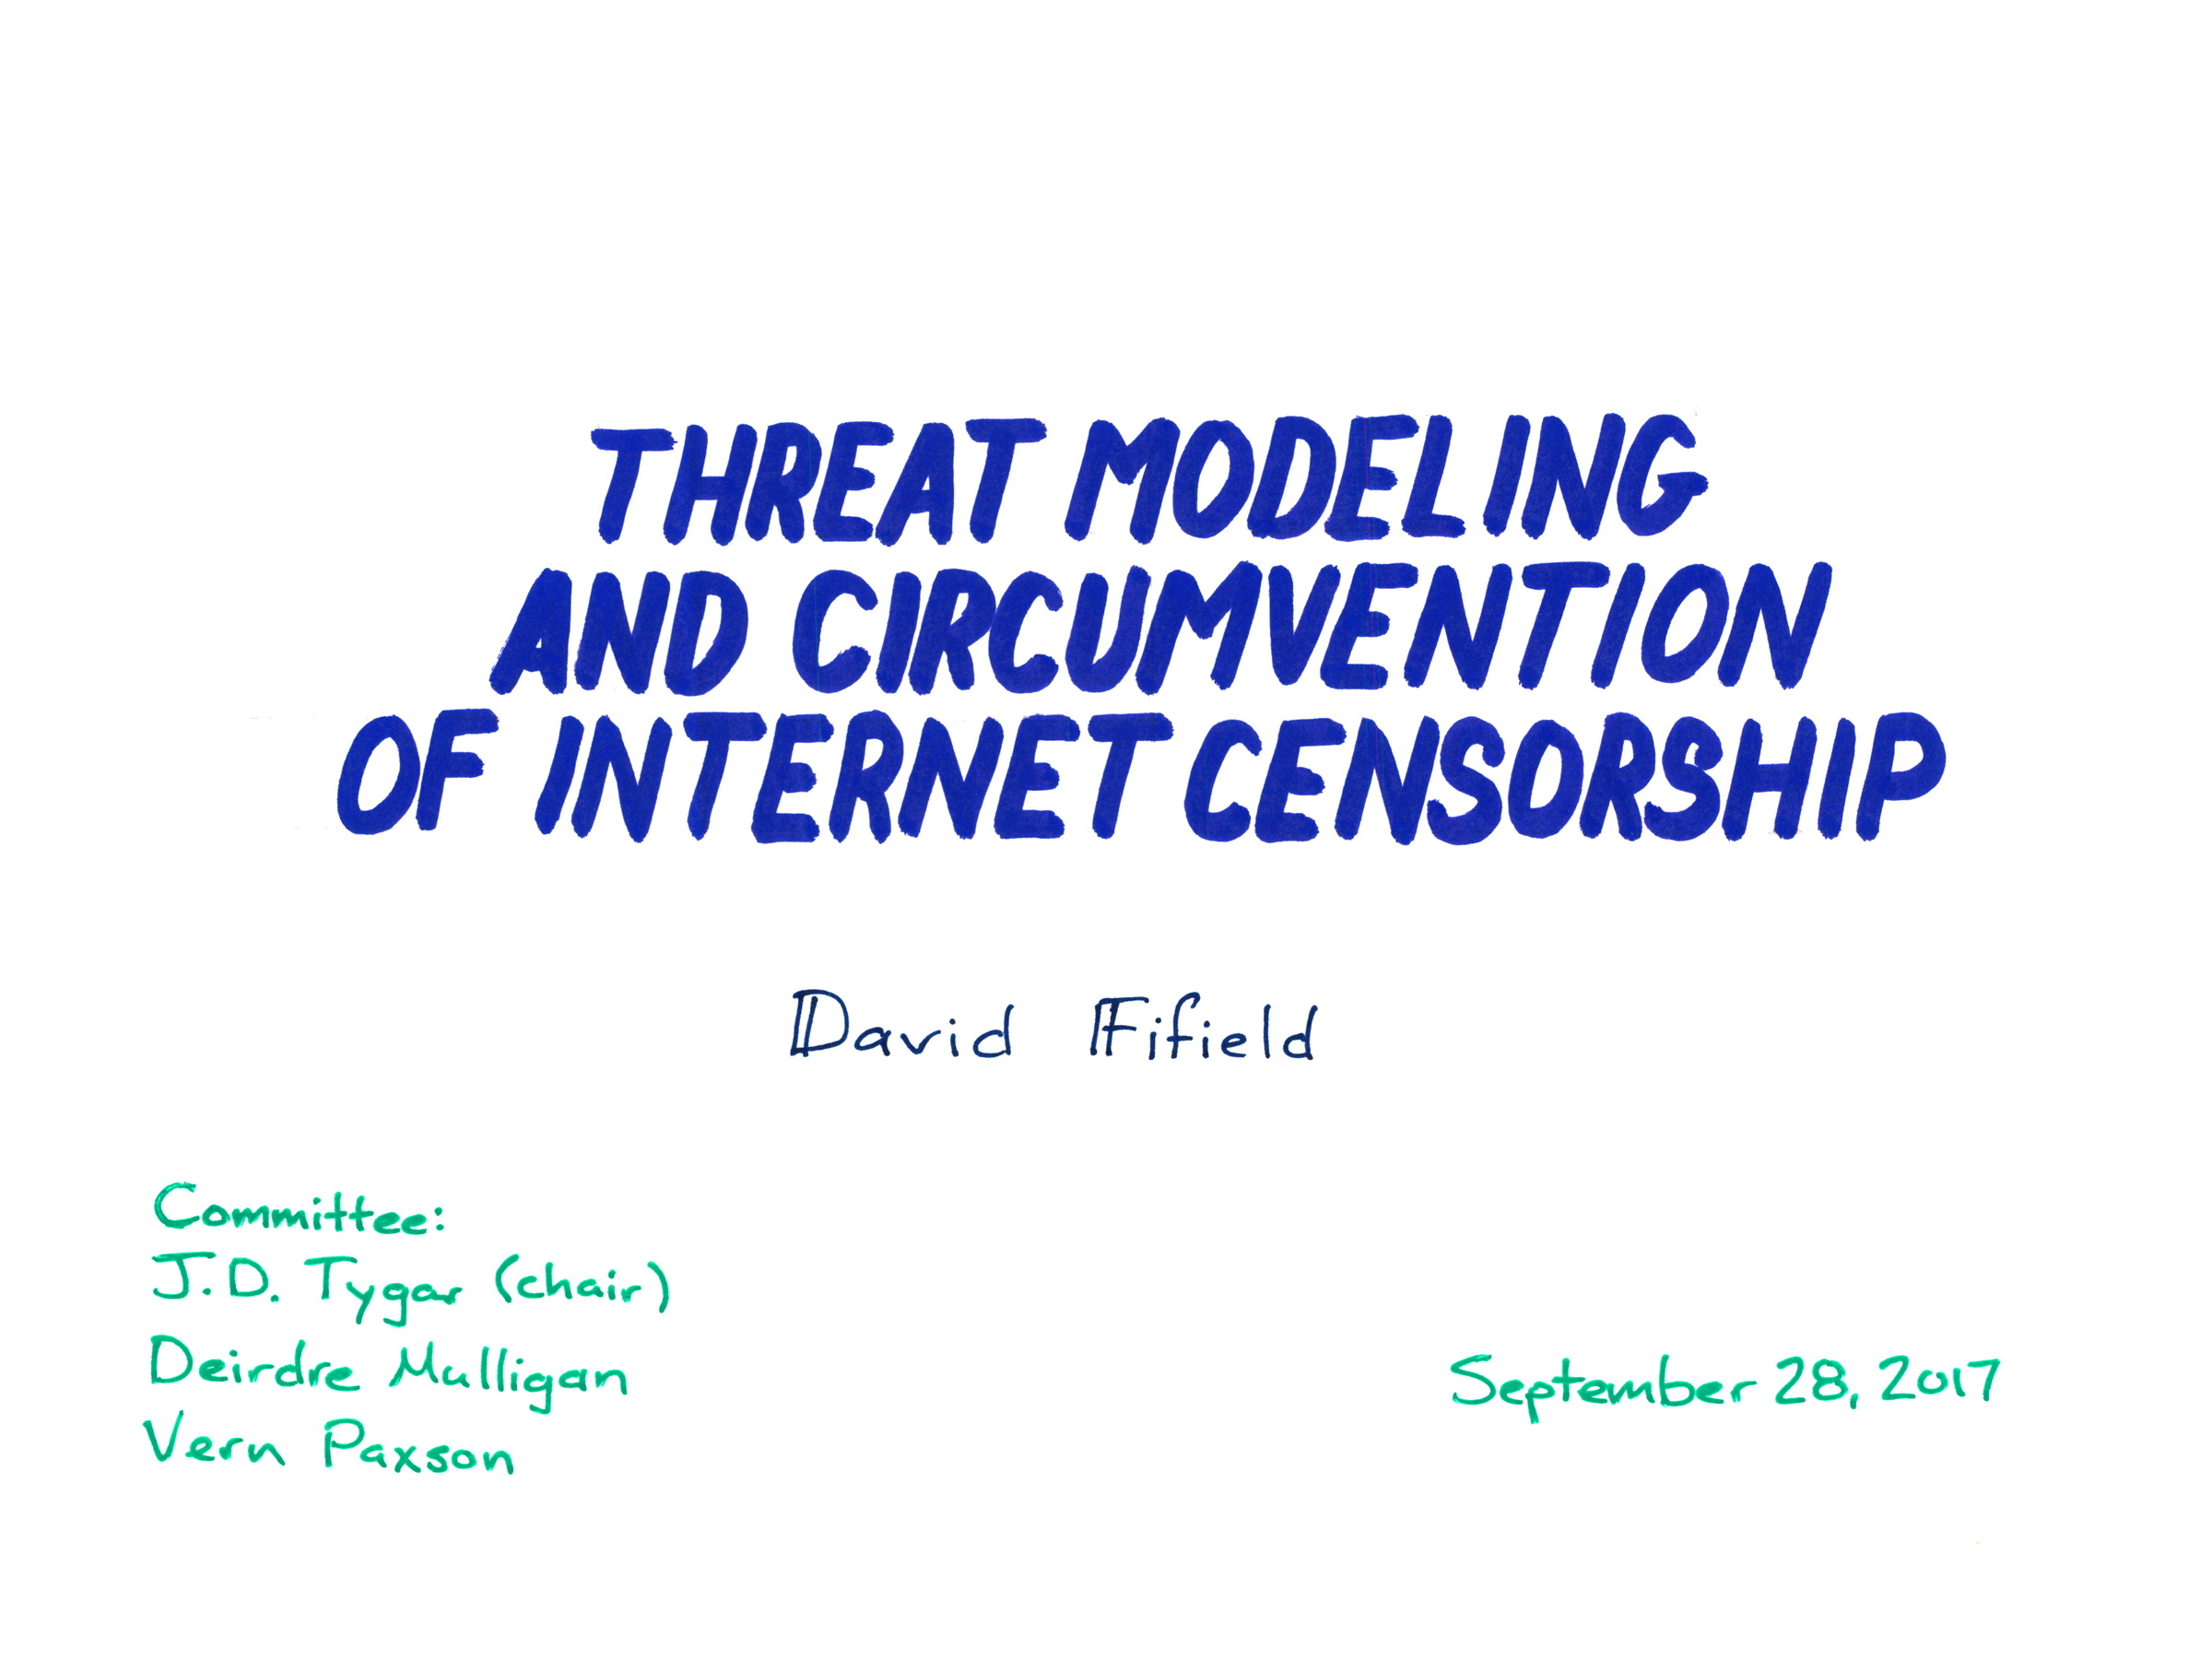 THREAT MODELING AND CIRCUMVENTION OF INTERNET CENSORSHIP

David Fifield

Committee:
J.D. Tygar (chair)
Deirdre Mulligan
Vern Paxson

September 28, 2017